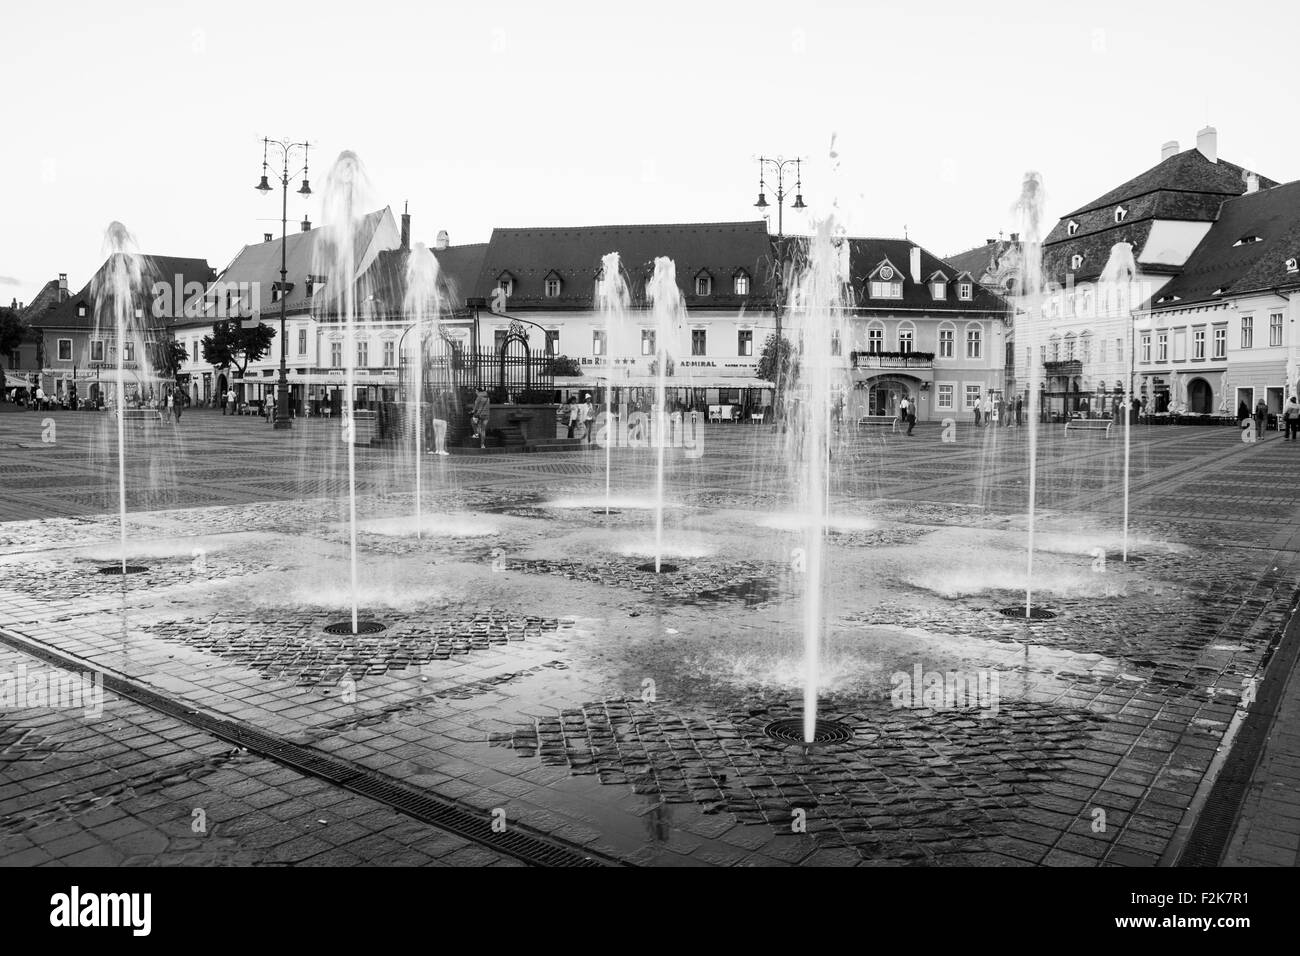 SIBIU - SEPTEMBER 09: Image of the Grand Square in Sibiu (Piața Mare din Sibiu, Großer Ring), designated the European Capital of Stock Photo